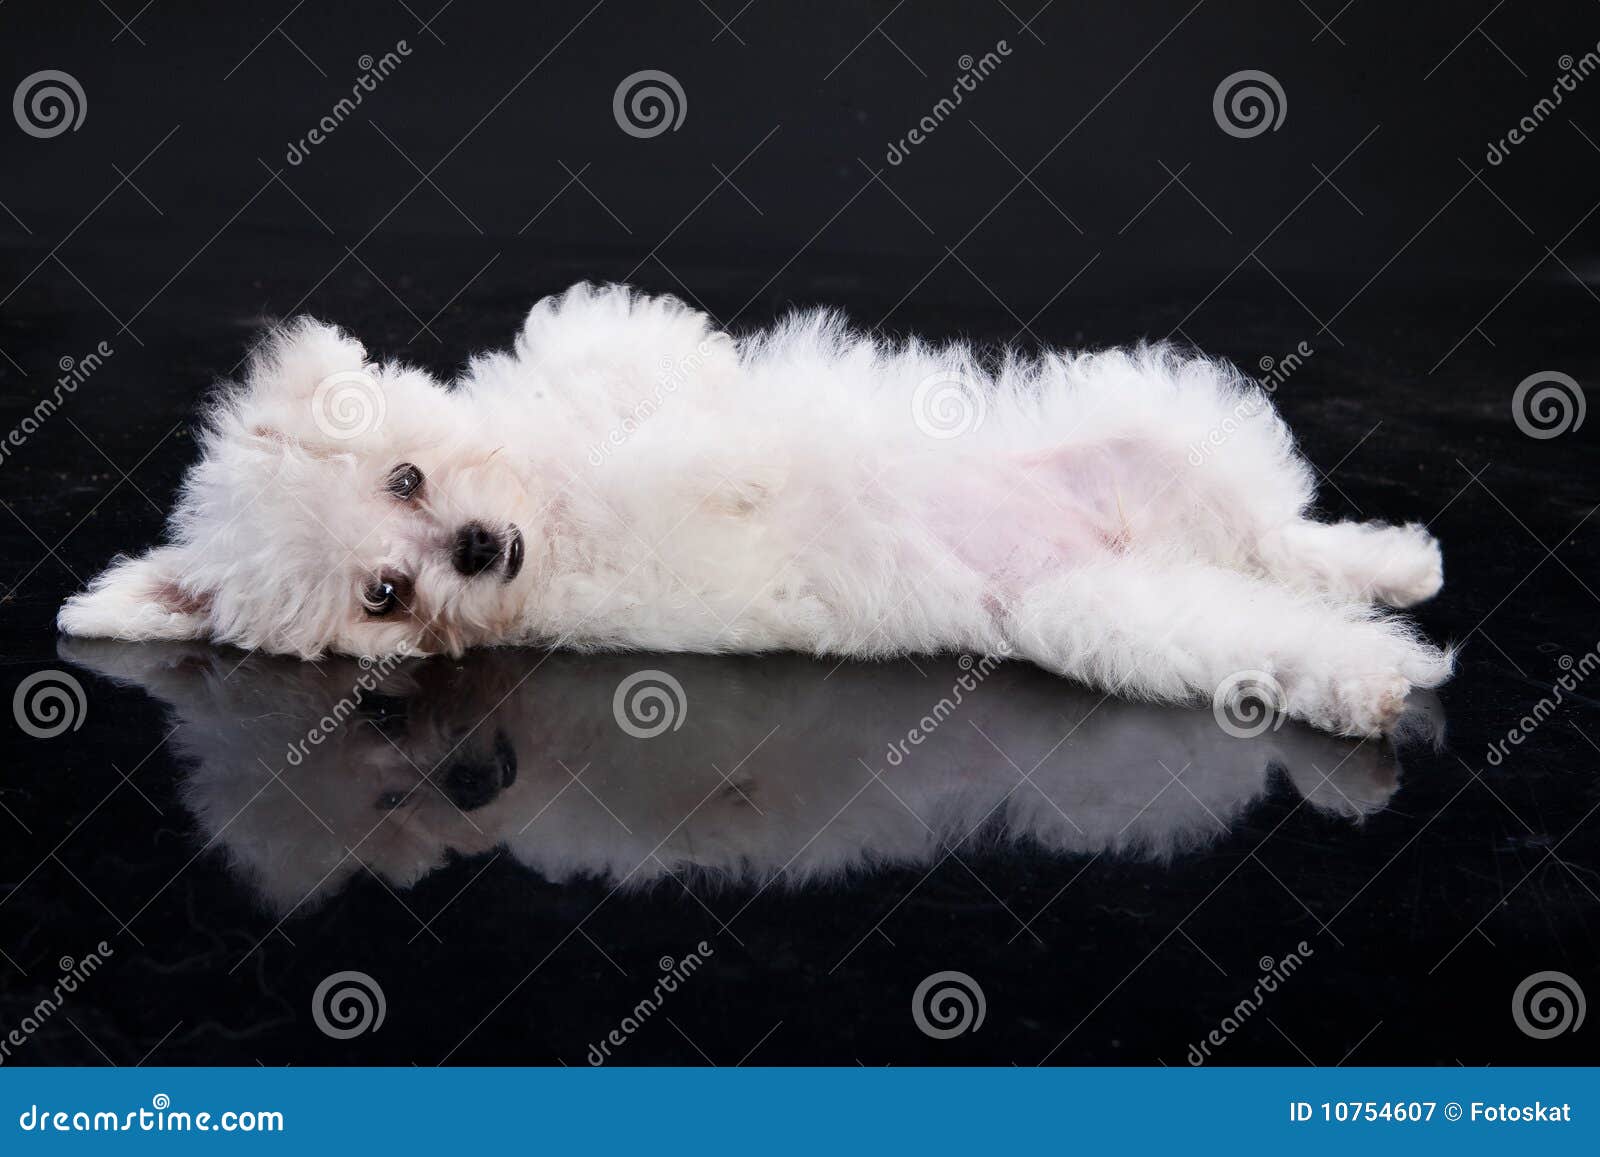 free clip art maltese dog - photo #44